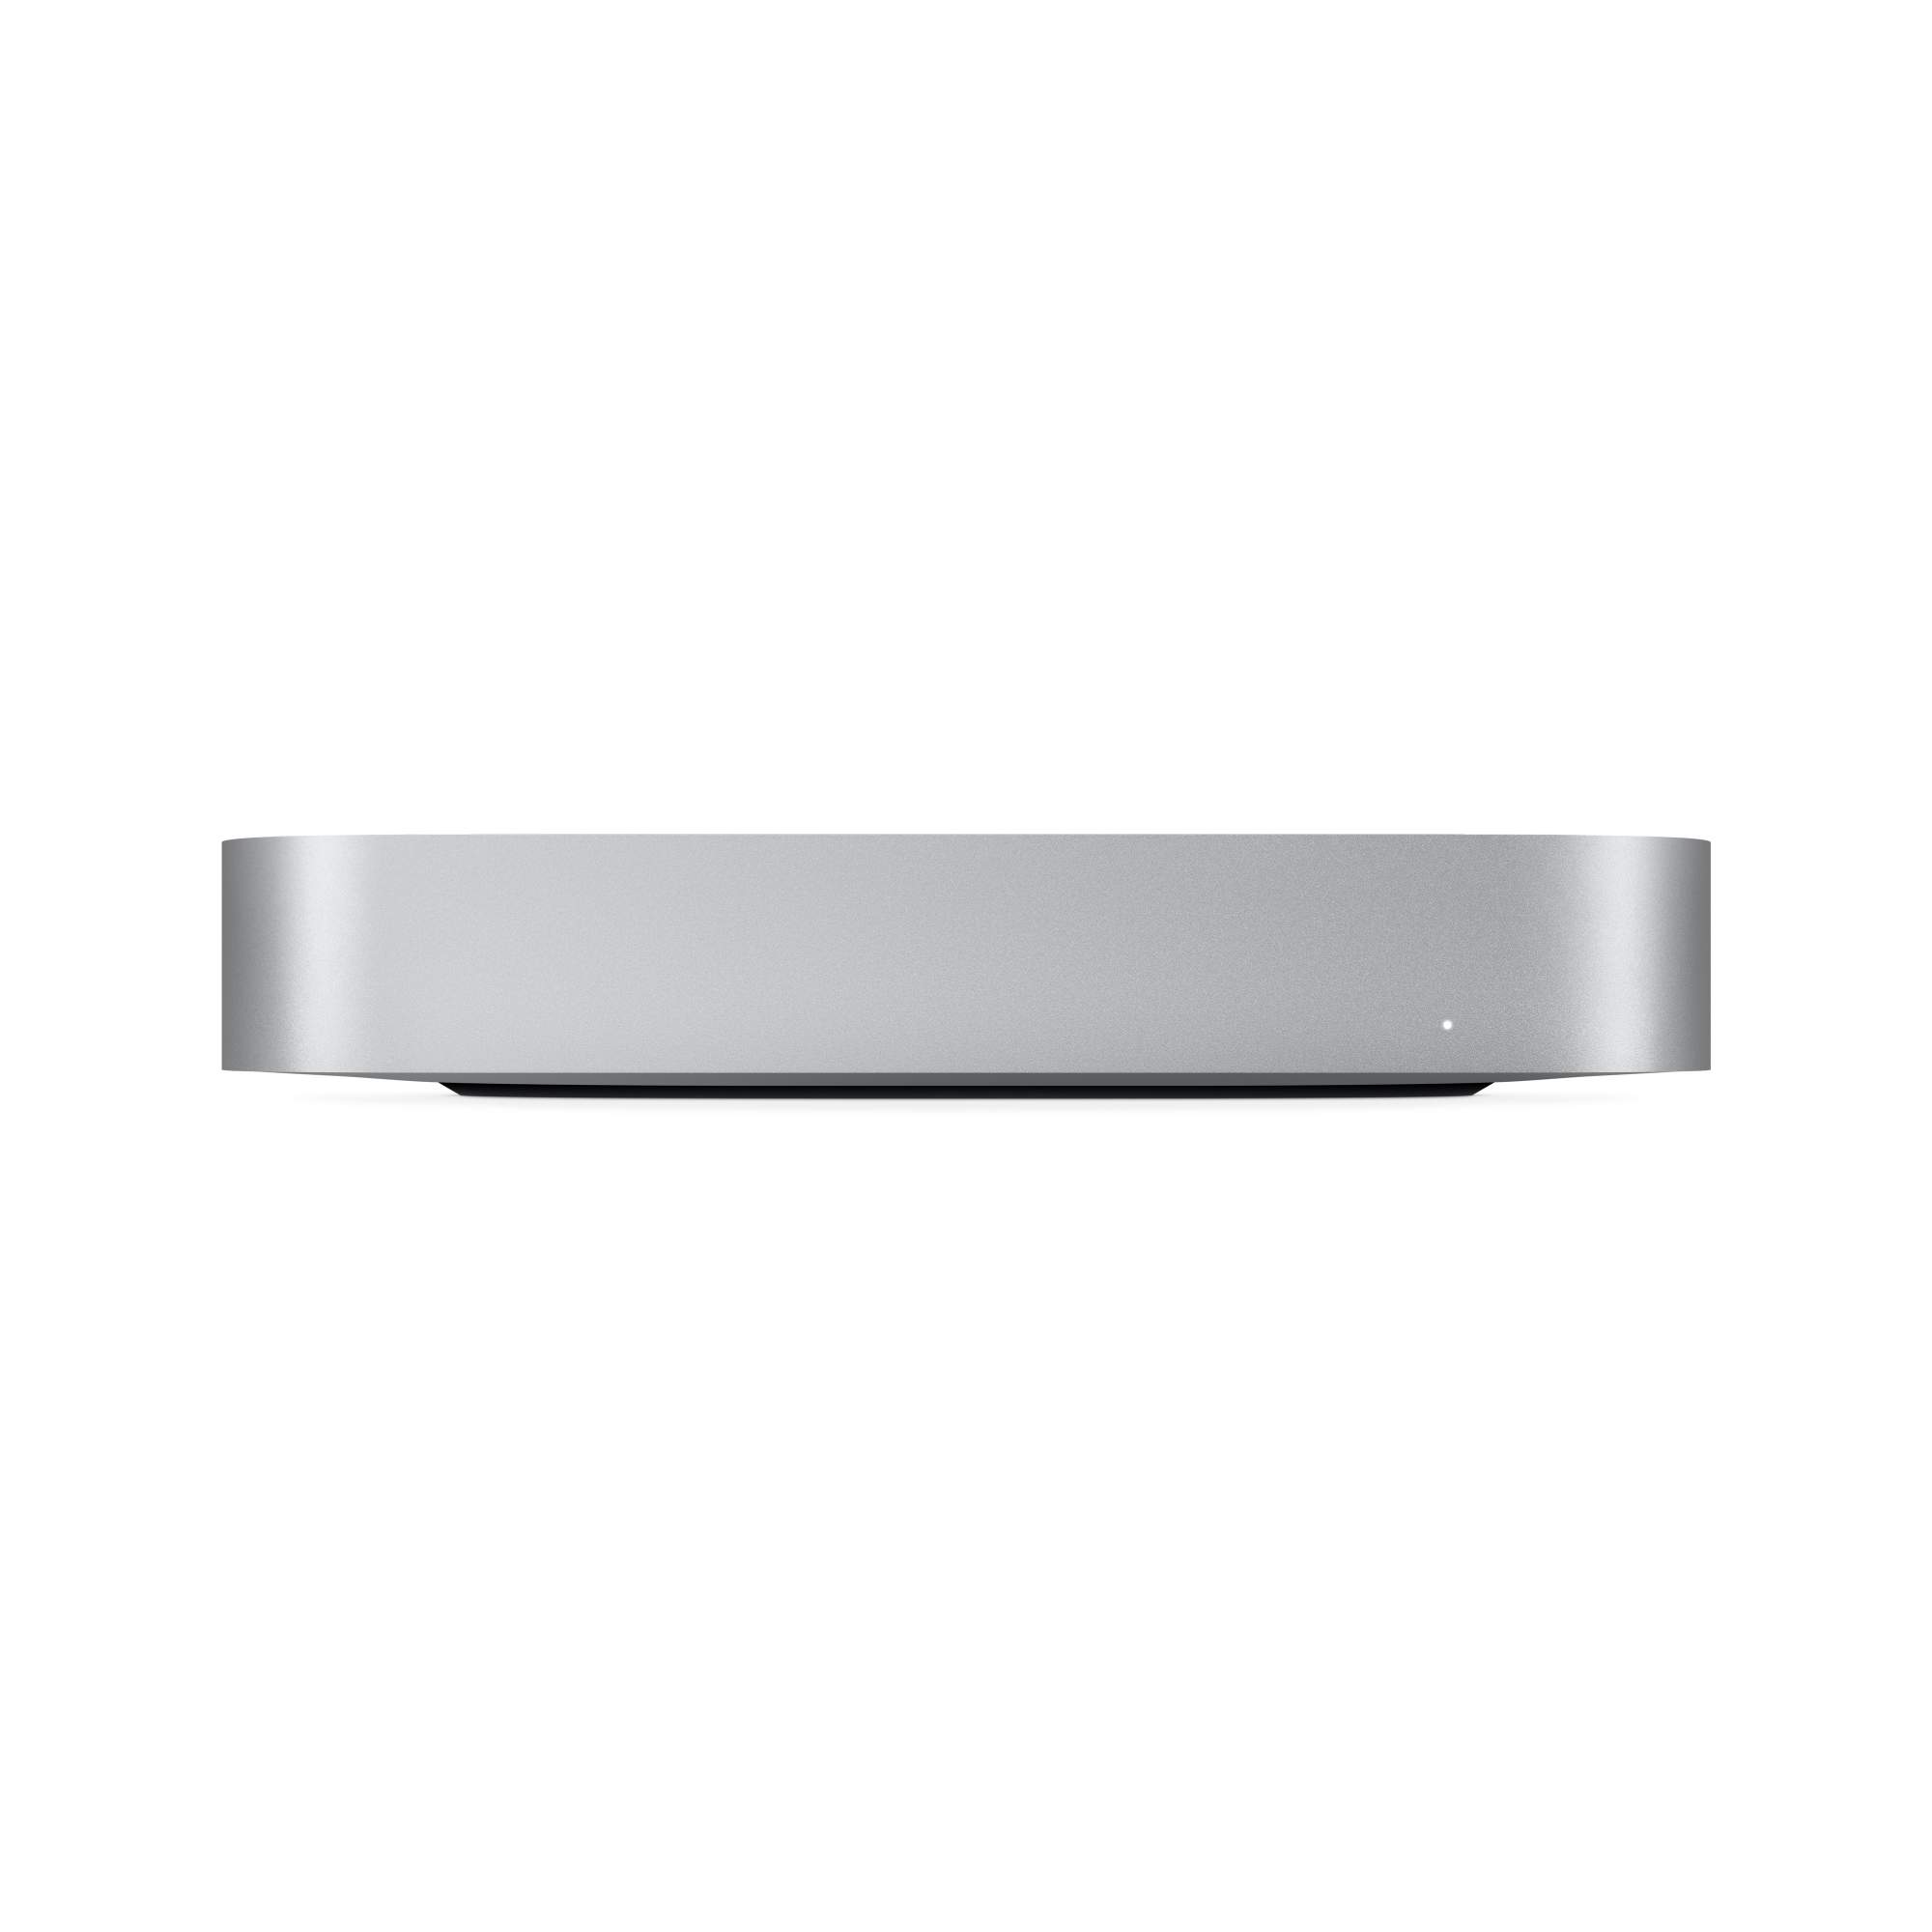 Системный блок Apple Mac Mini 2020 M1/8GB/256GB (MGNR3RU/A)